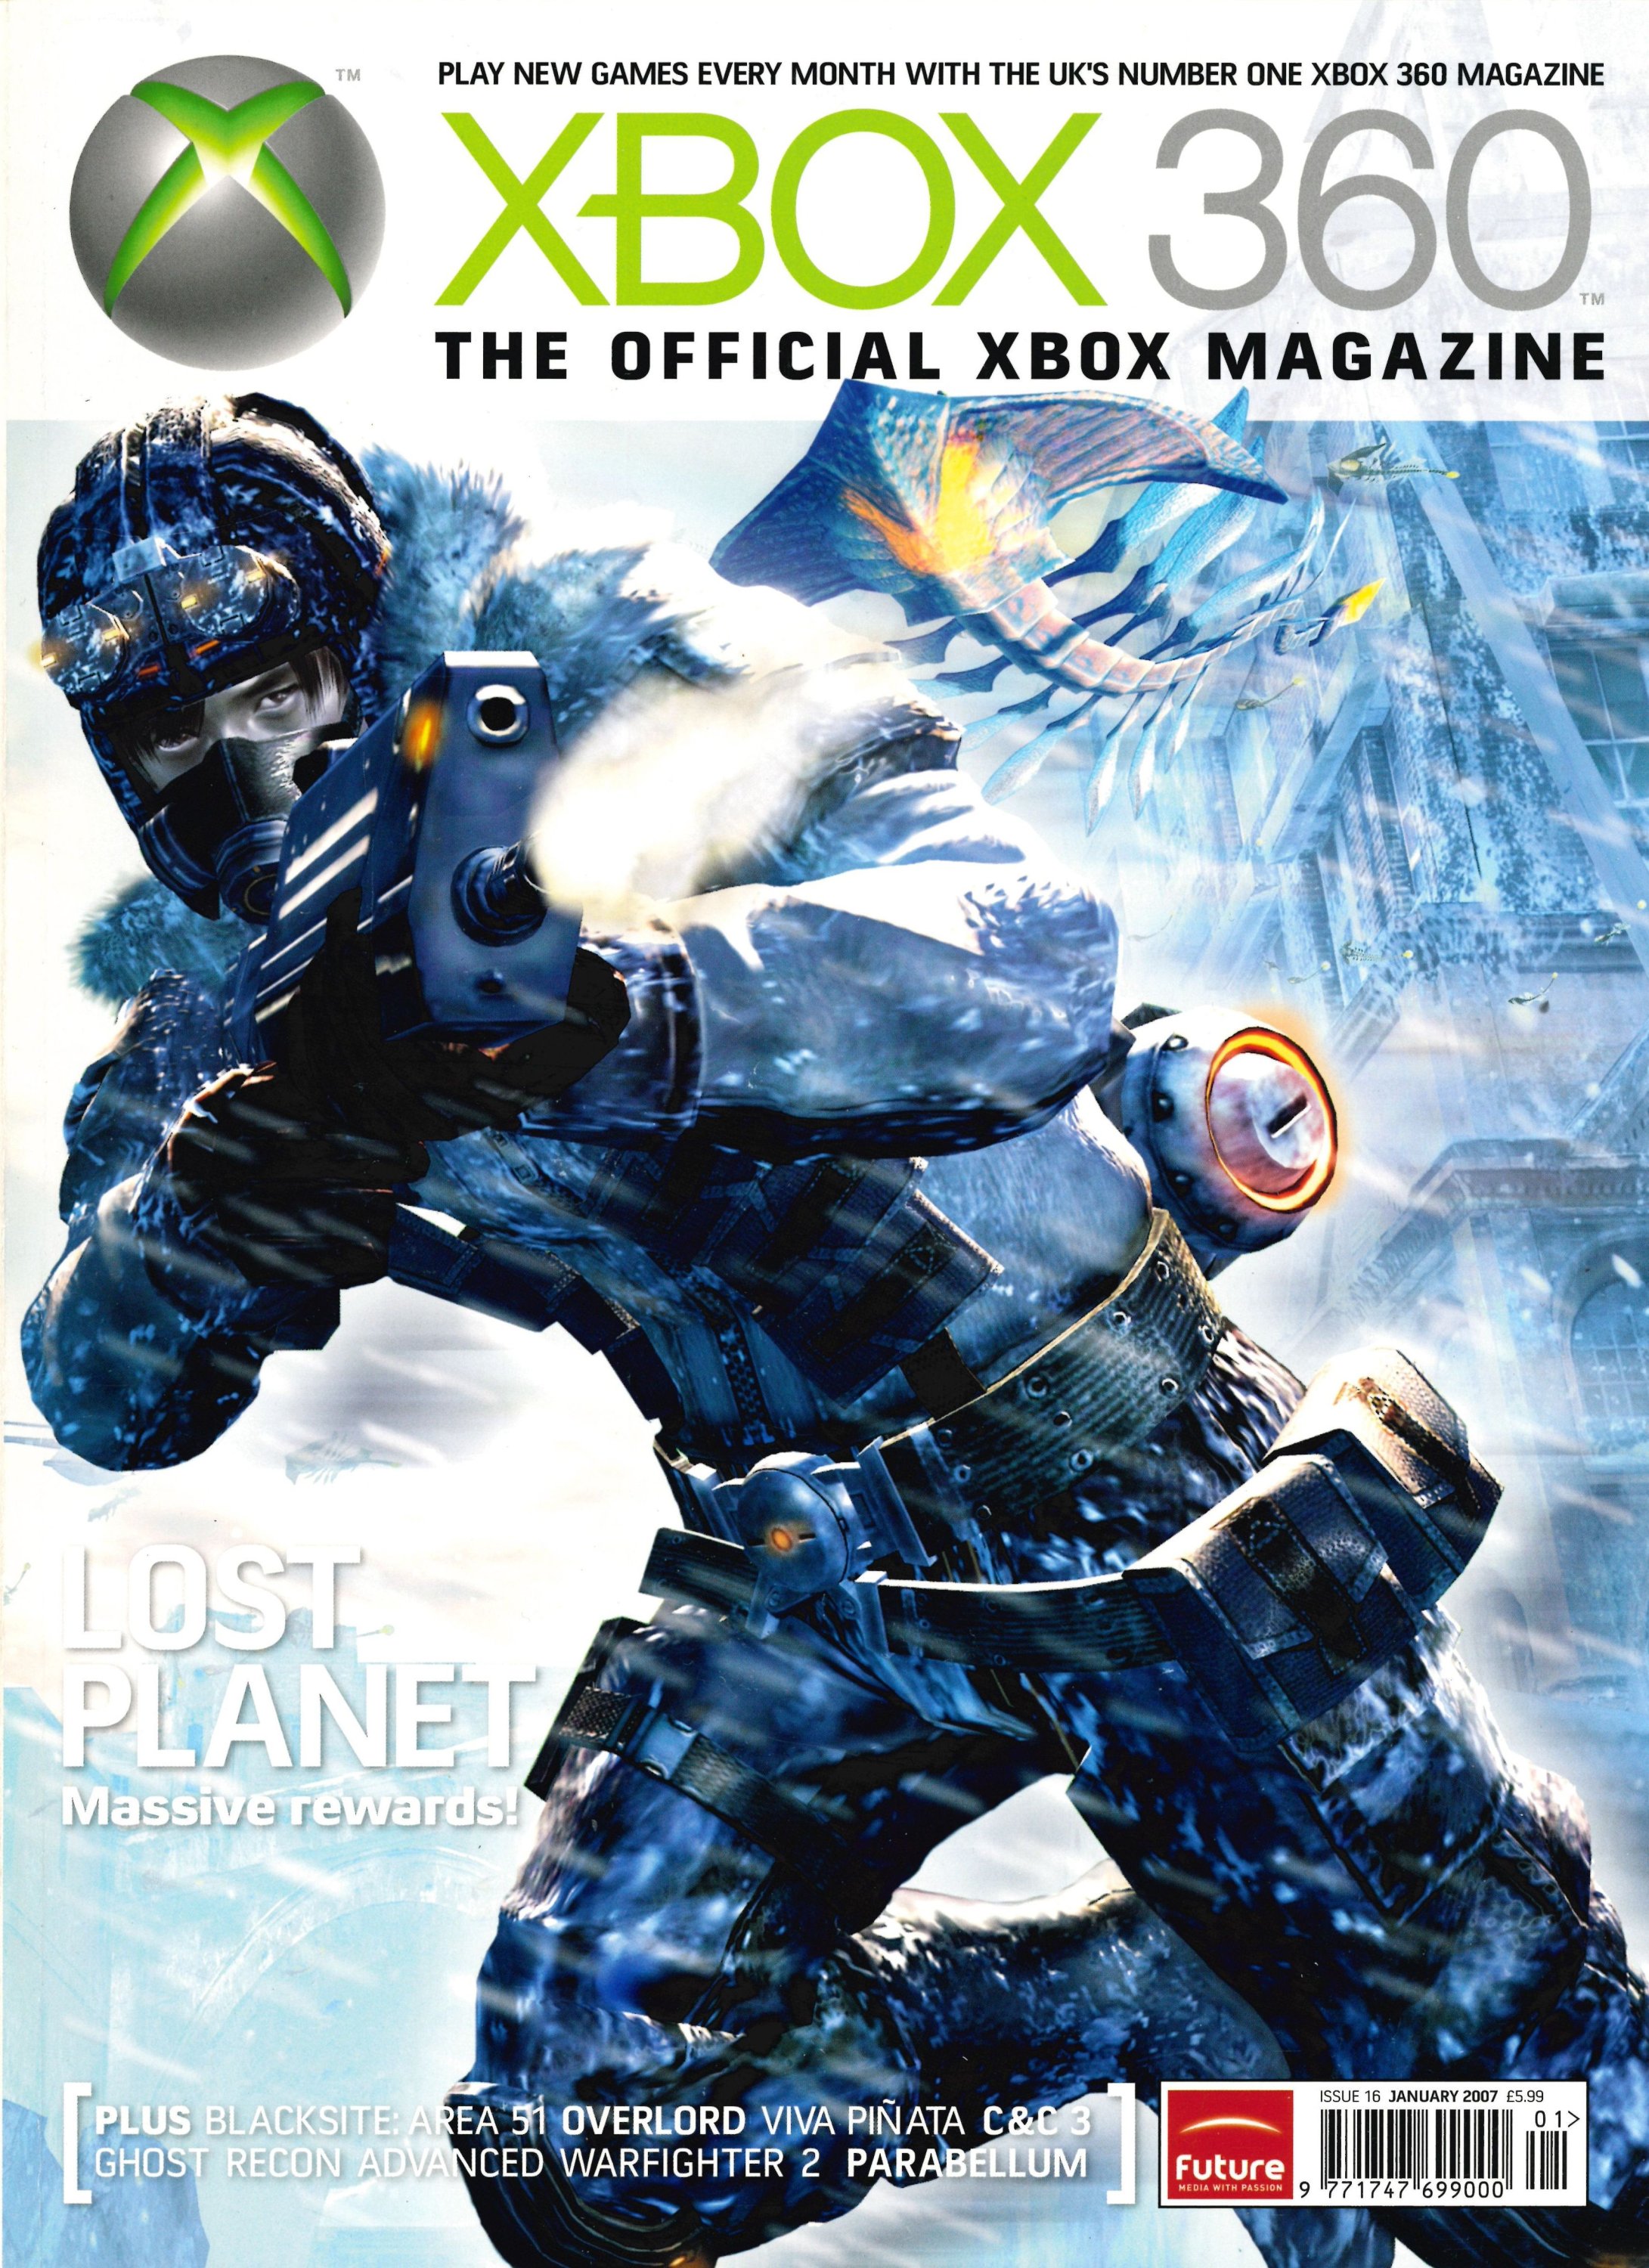 BlackSite Area 51 Microsoft Xbox 360 Complete – Endless Media